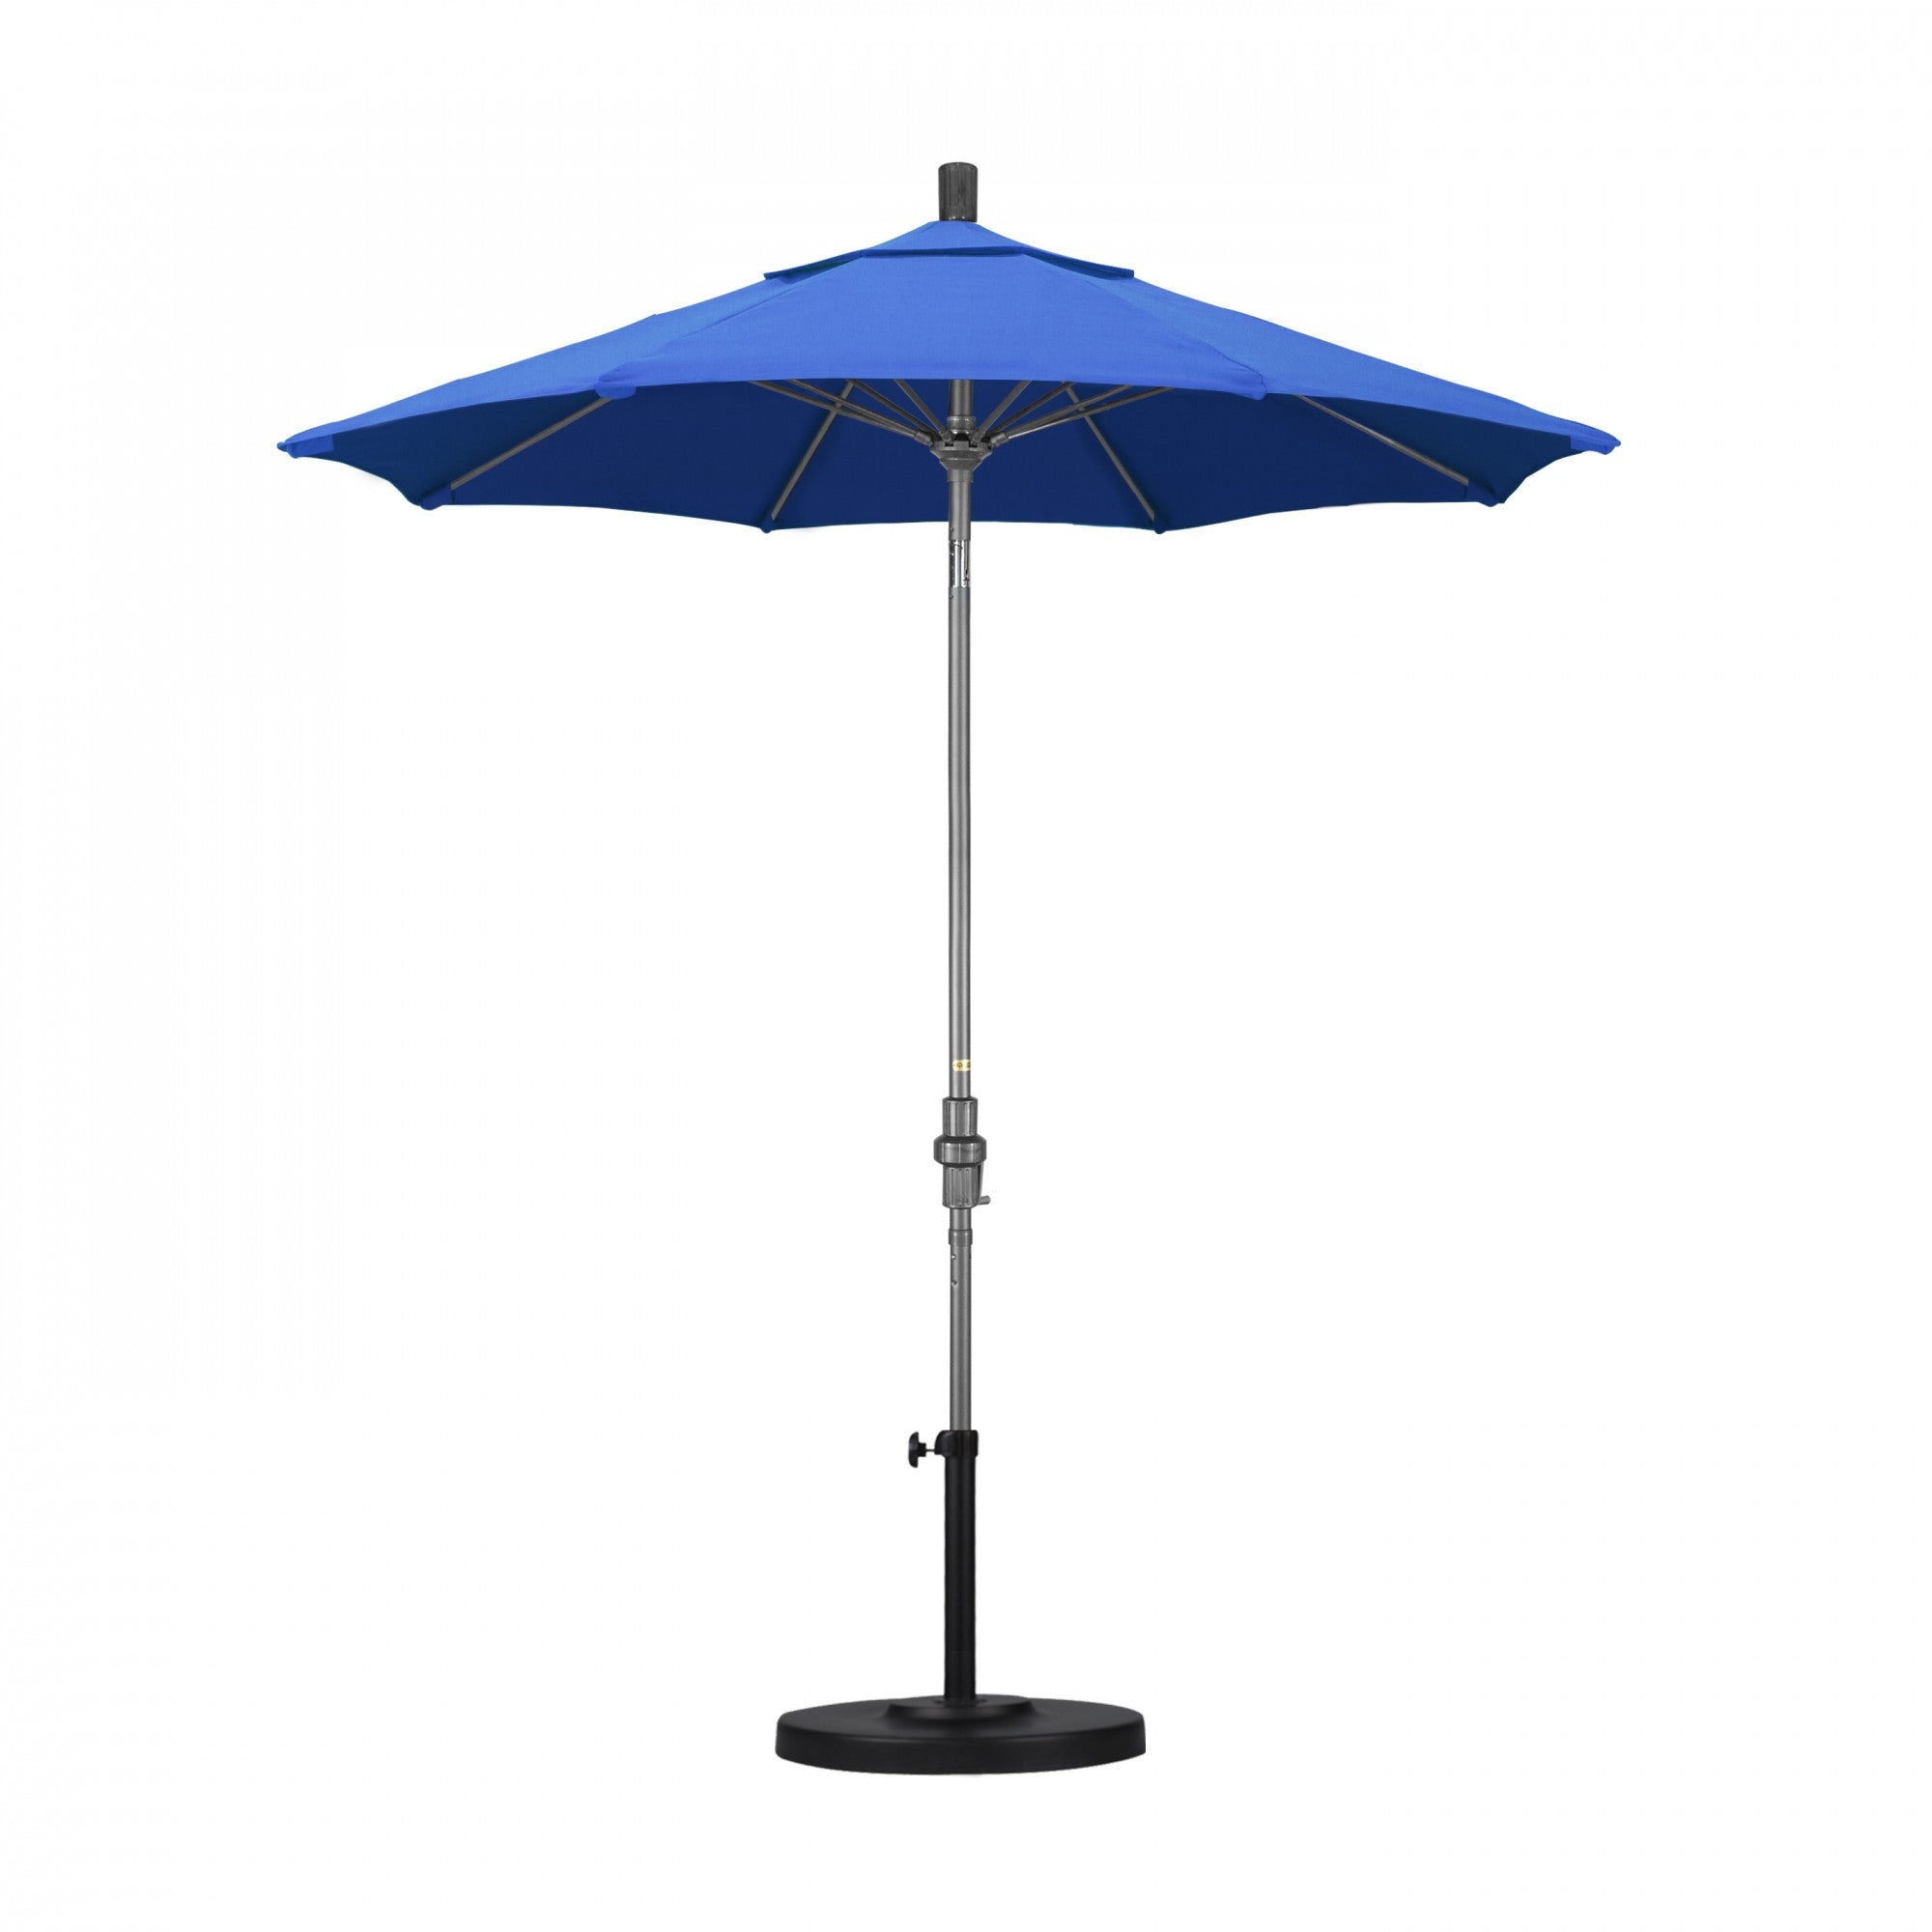 California Umbrella - 7.5' - Patio Umbrella Umbrella - Aluminum Pole - Royal Blue - Olefin - GSCUF758010-F03